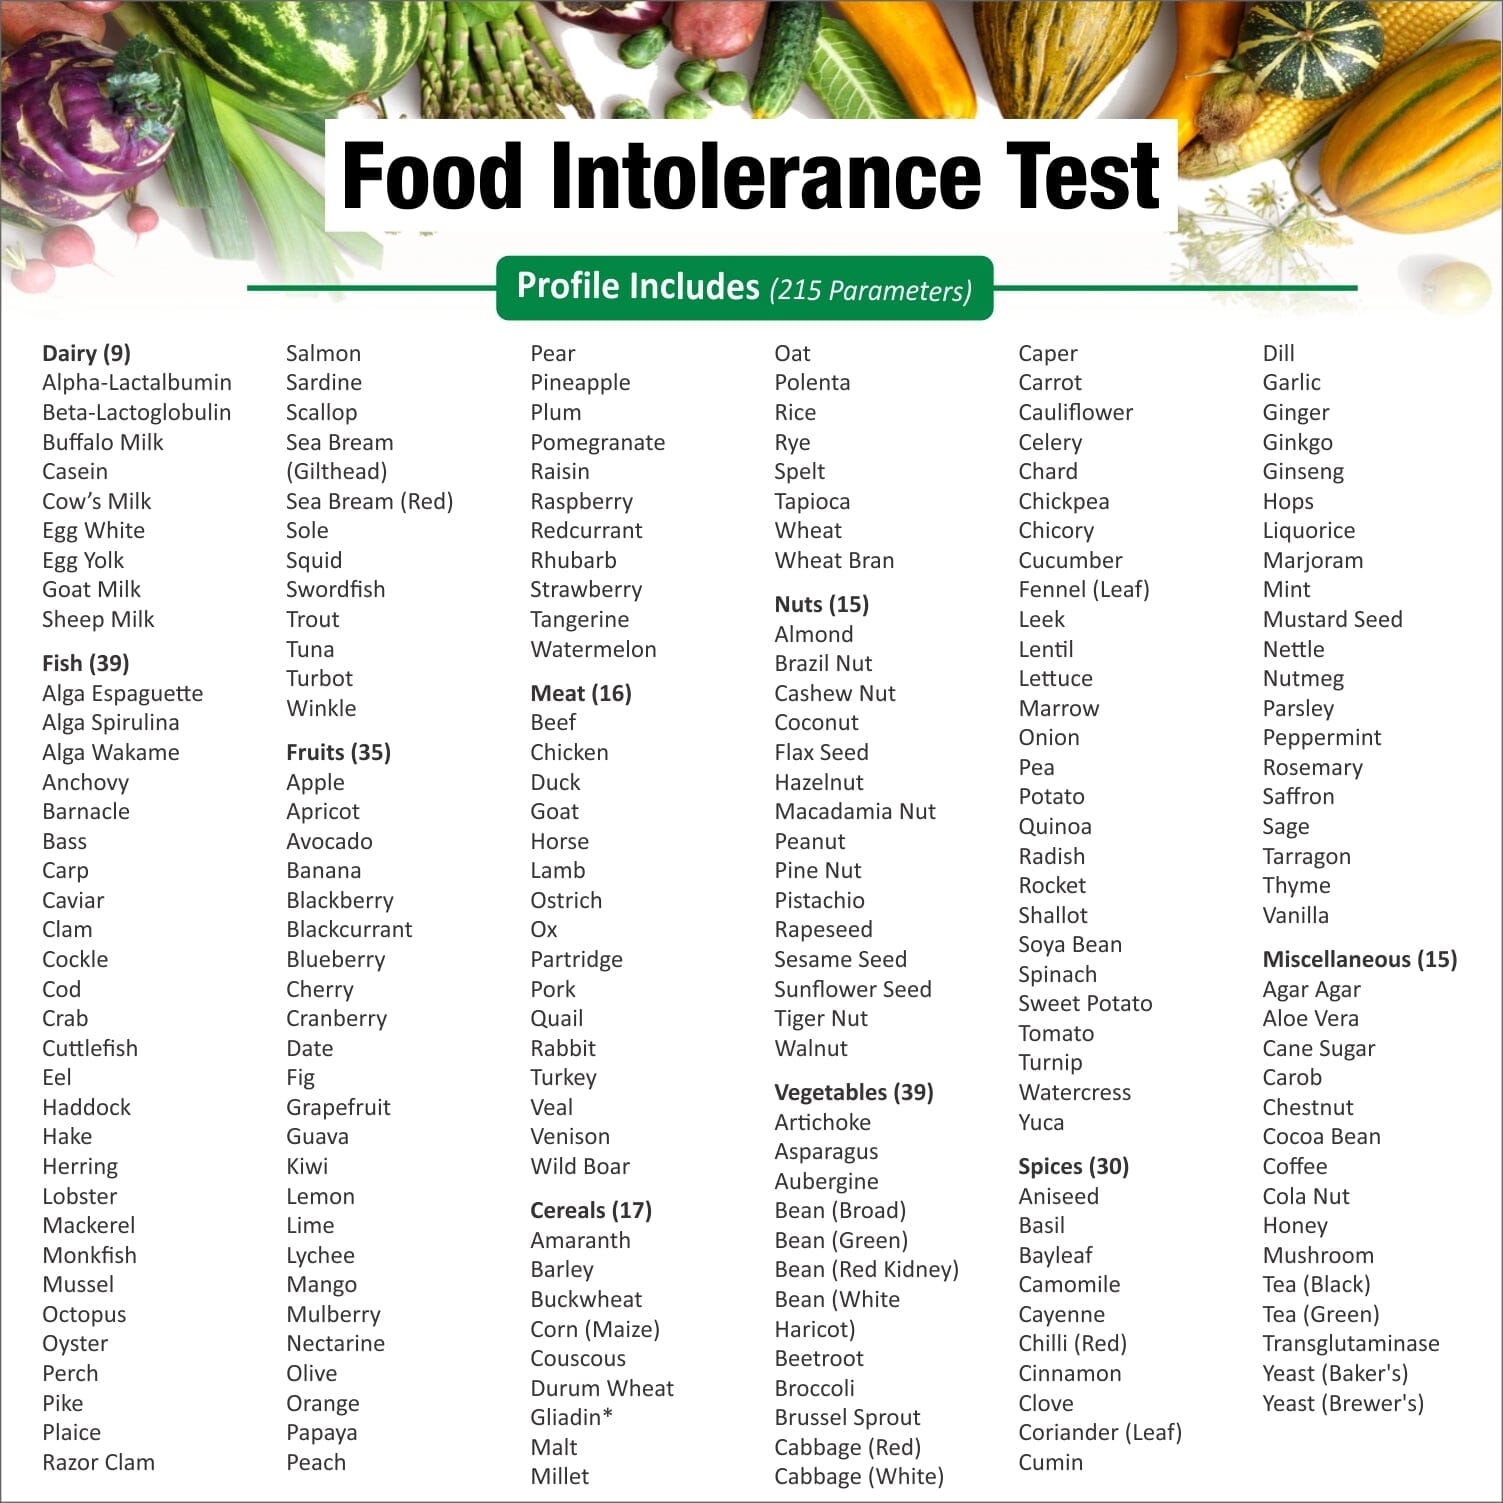 MyDiagnostics Premium Food Intolerance Test (IgG test based)